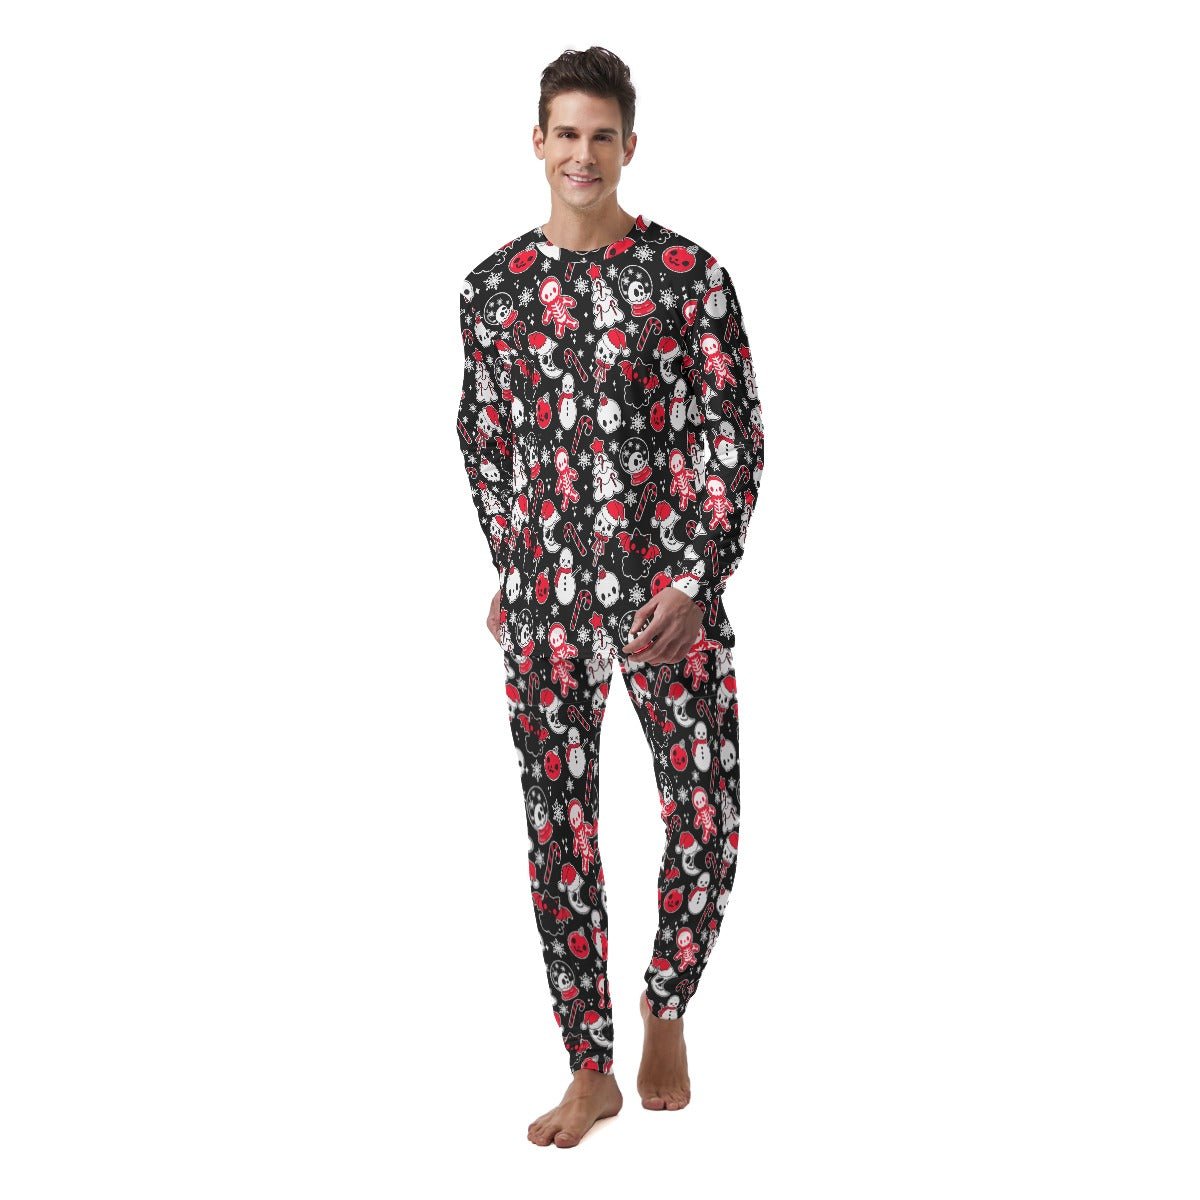 Men's Christmas Pyjamas - Creepy Black - Festive Style